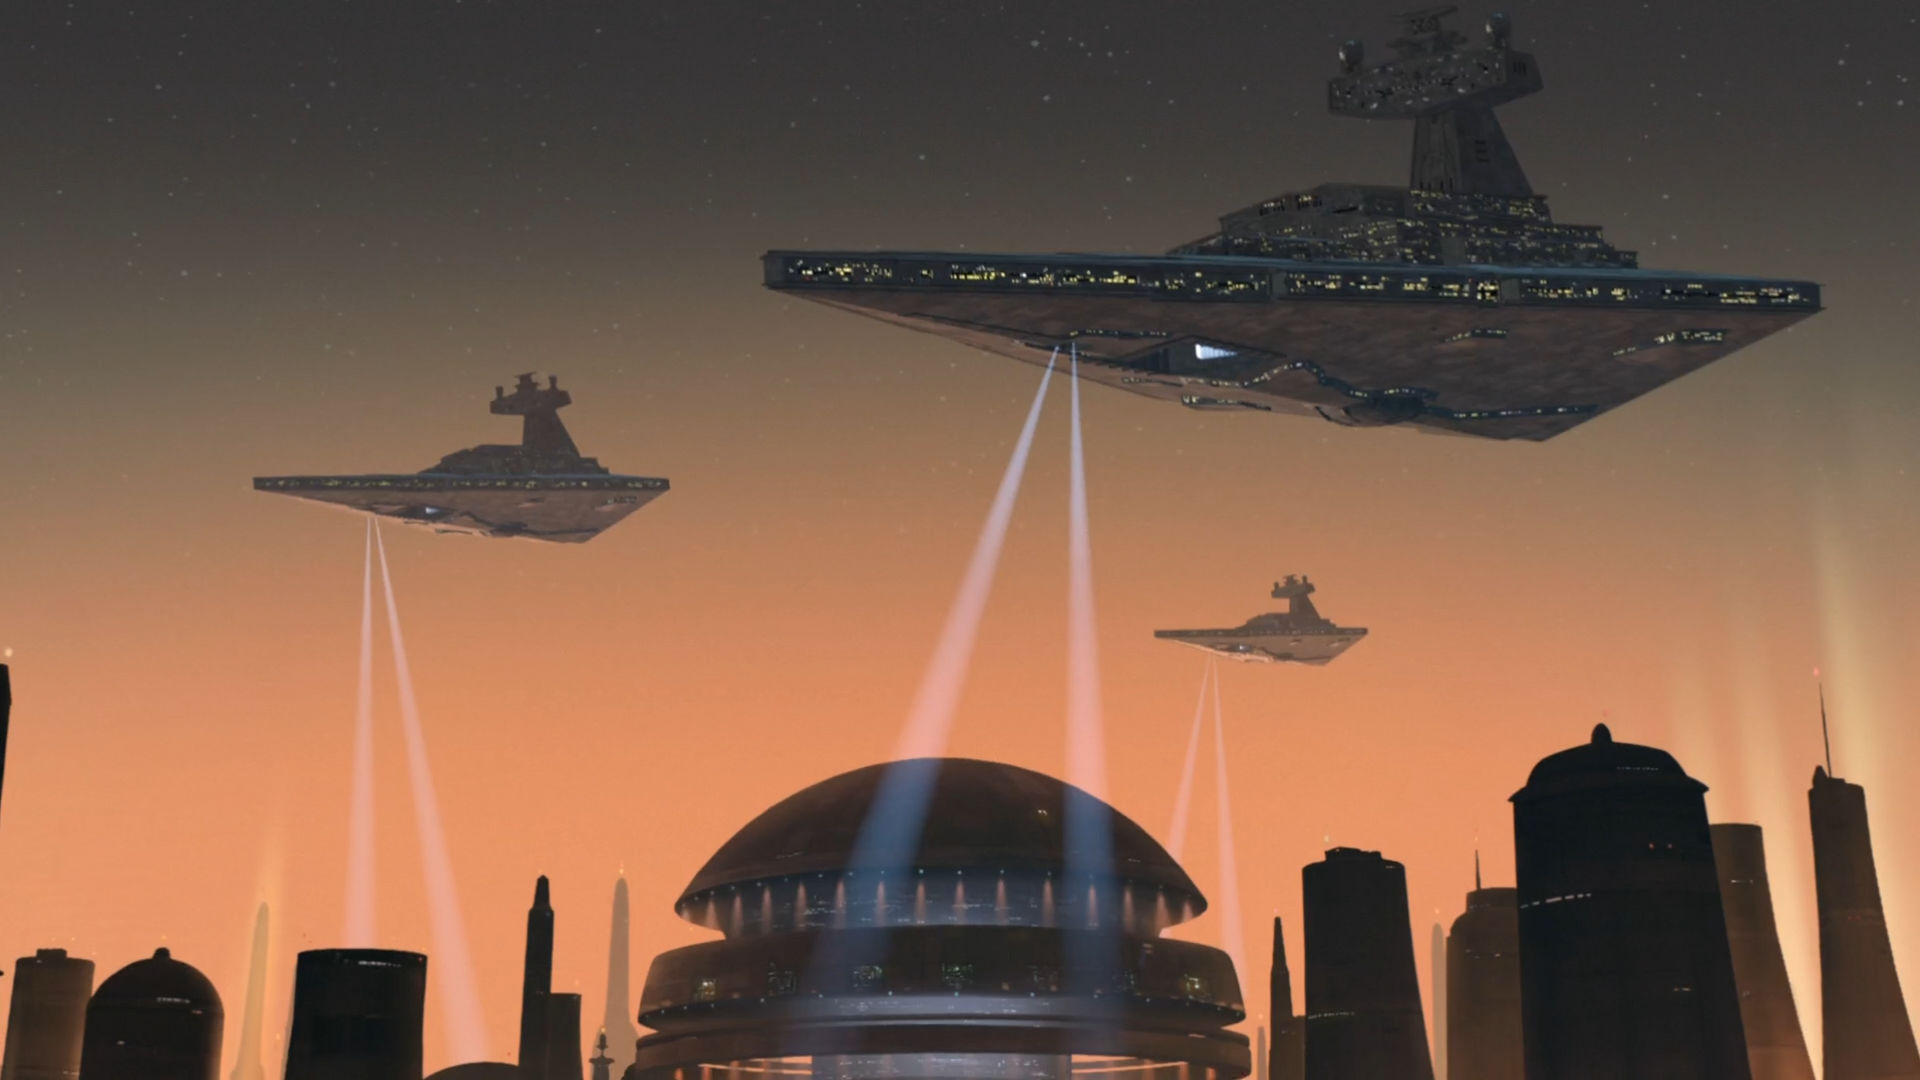 TV Show Star Wars Rebels HD Wallpaper | Background Image